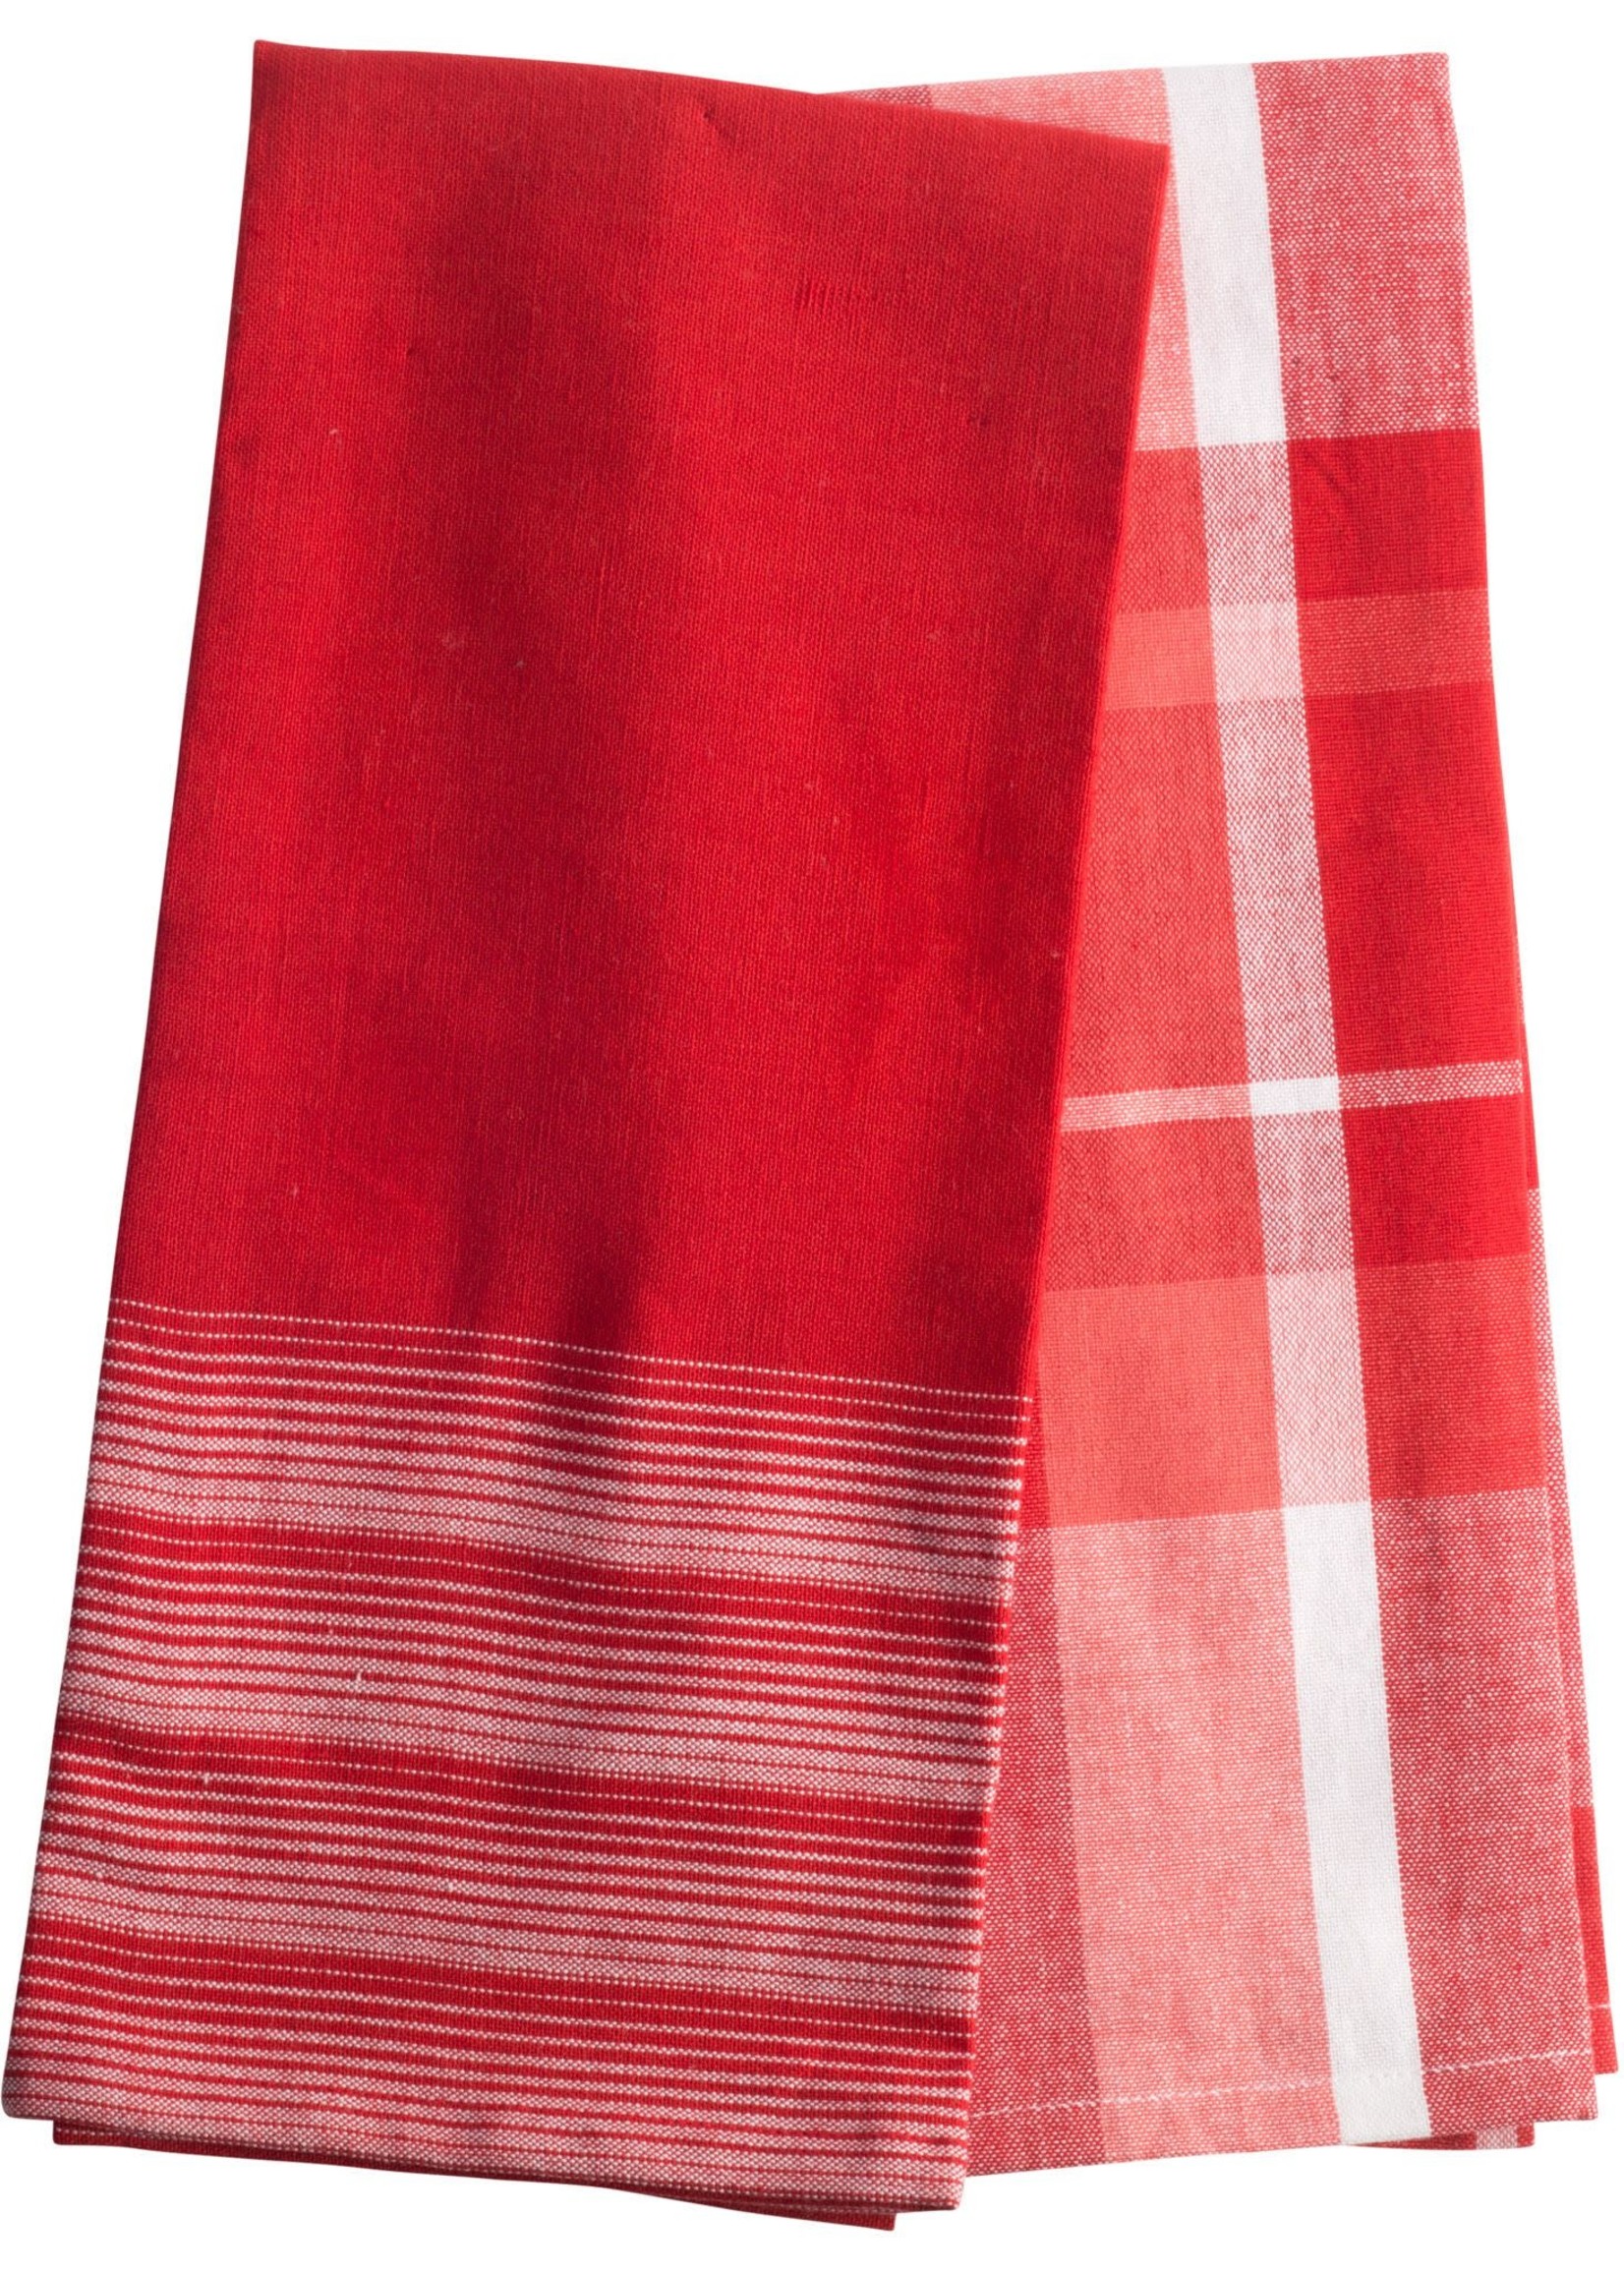 Home Essentials Horizon Stripe And Plaid Red Kitchen Towel Set of 2